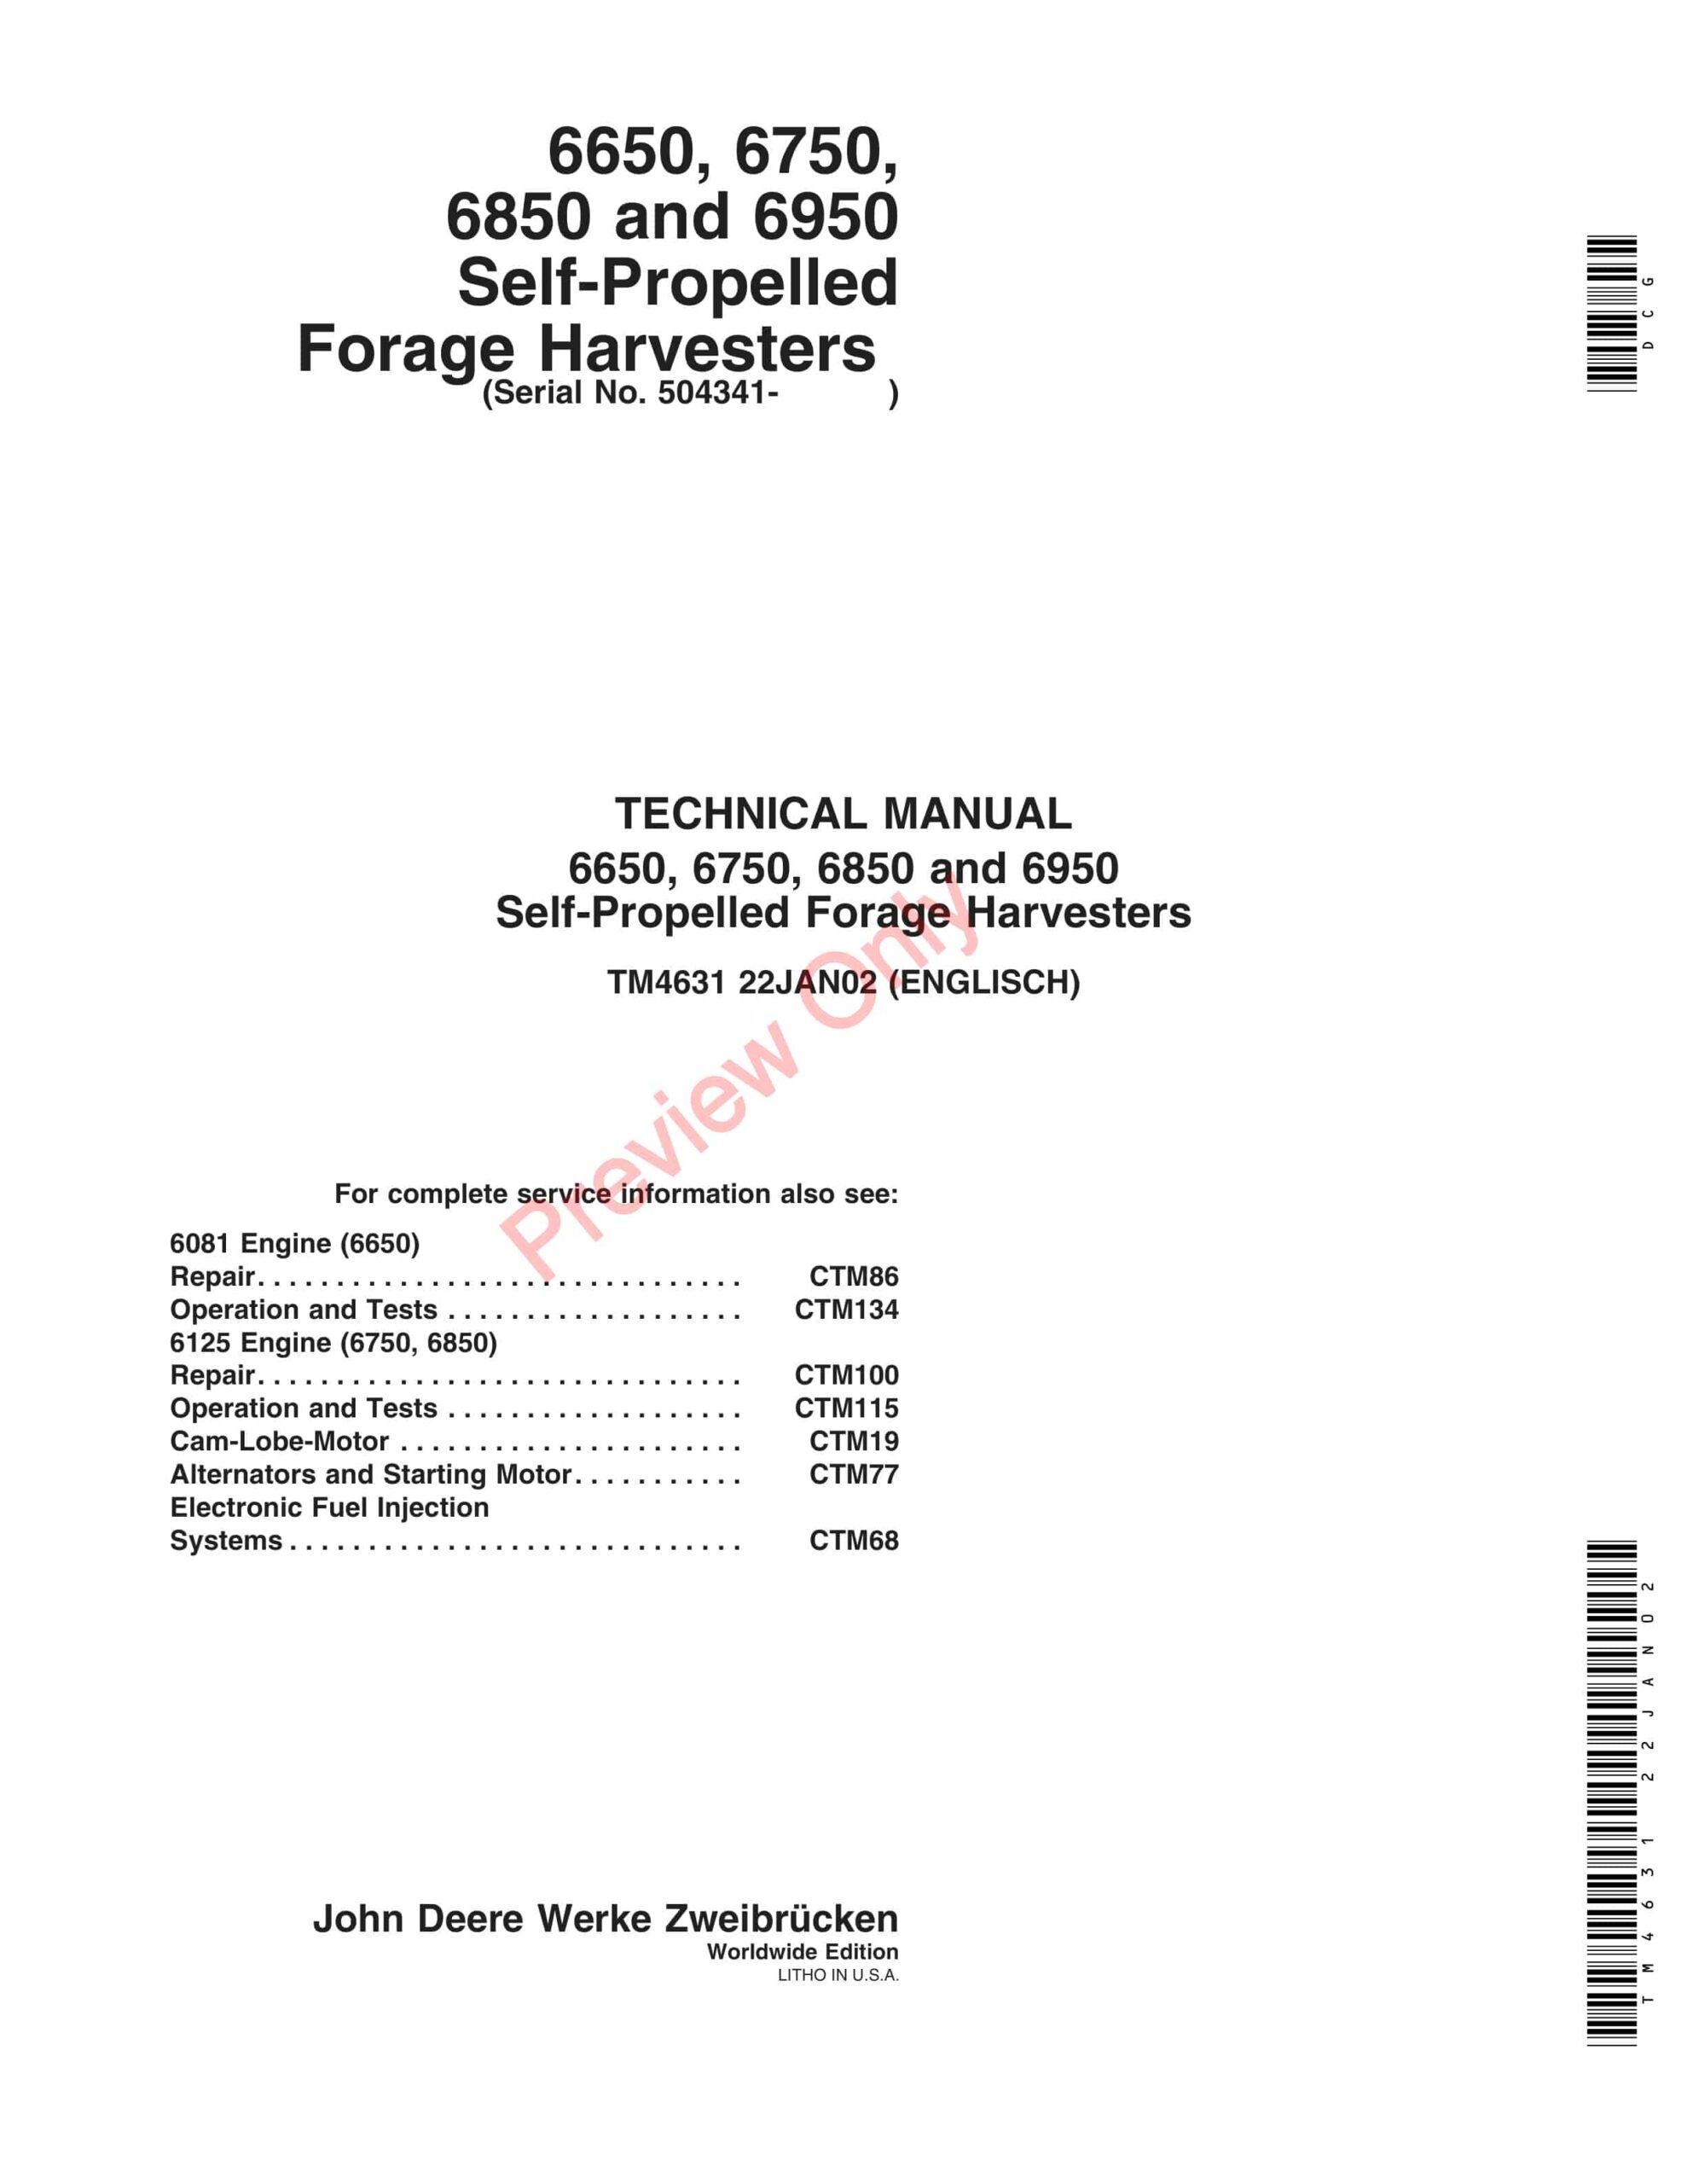 John Deere 6650, 6750, 6850 and 6950 Self-Propelled Forage Harvesters Technical Manual TM4631 22JAN02-1